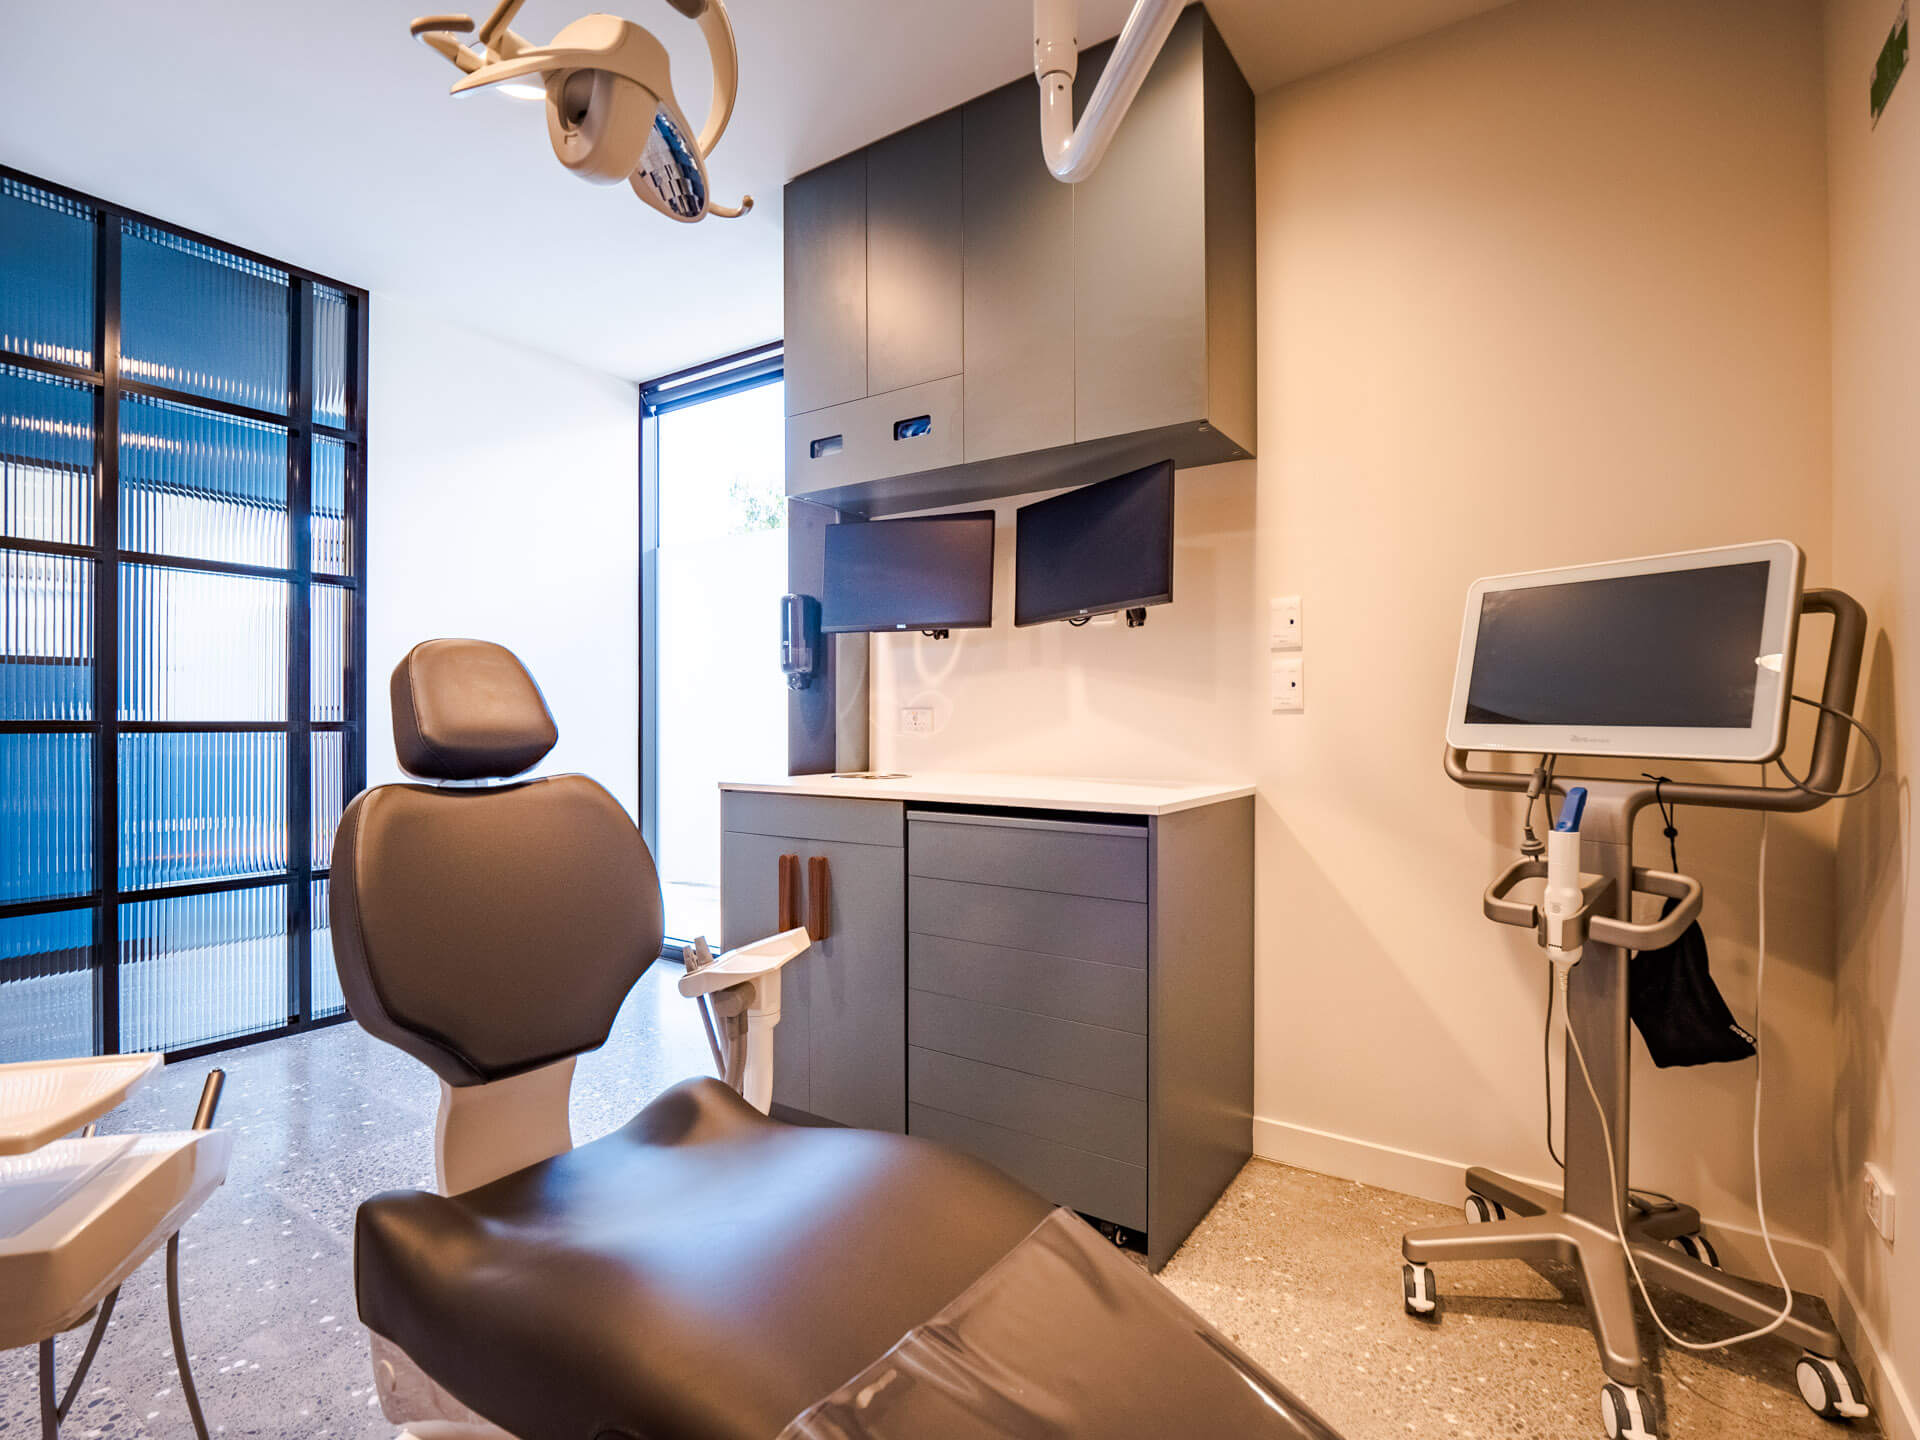 Orthodontic treatment area